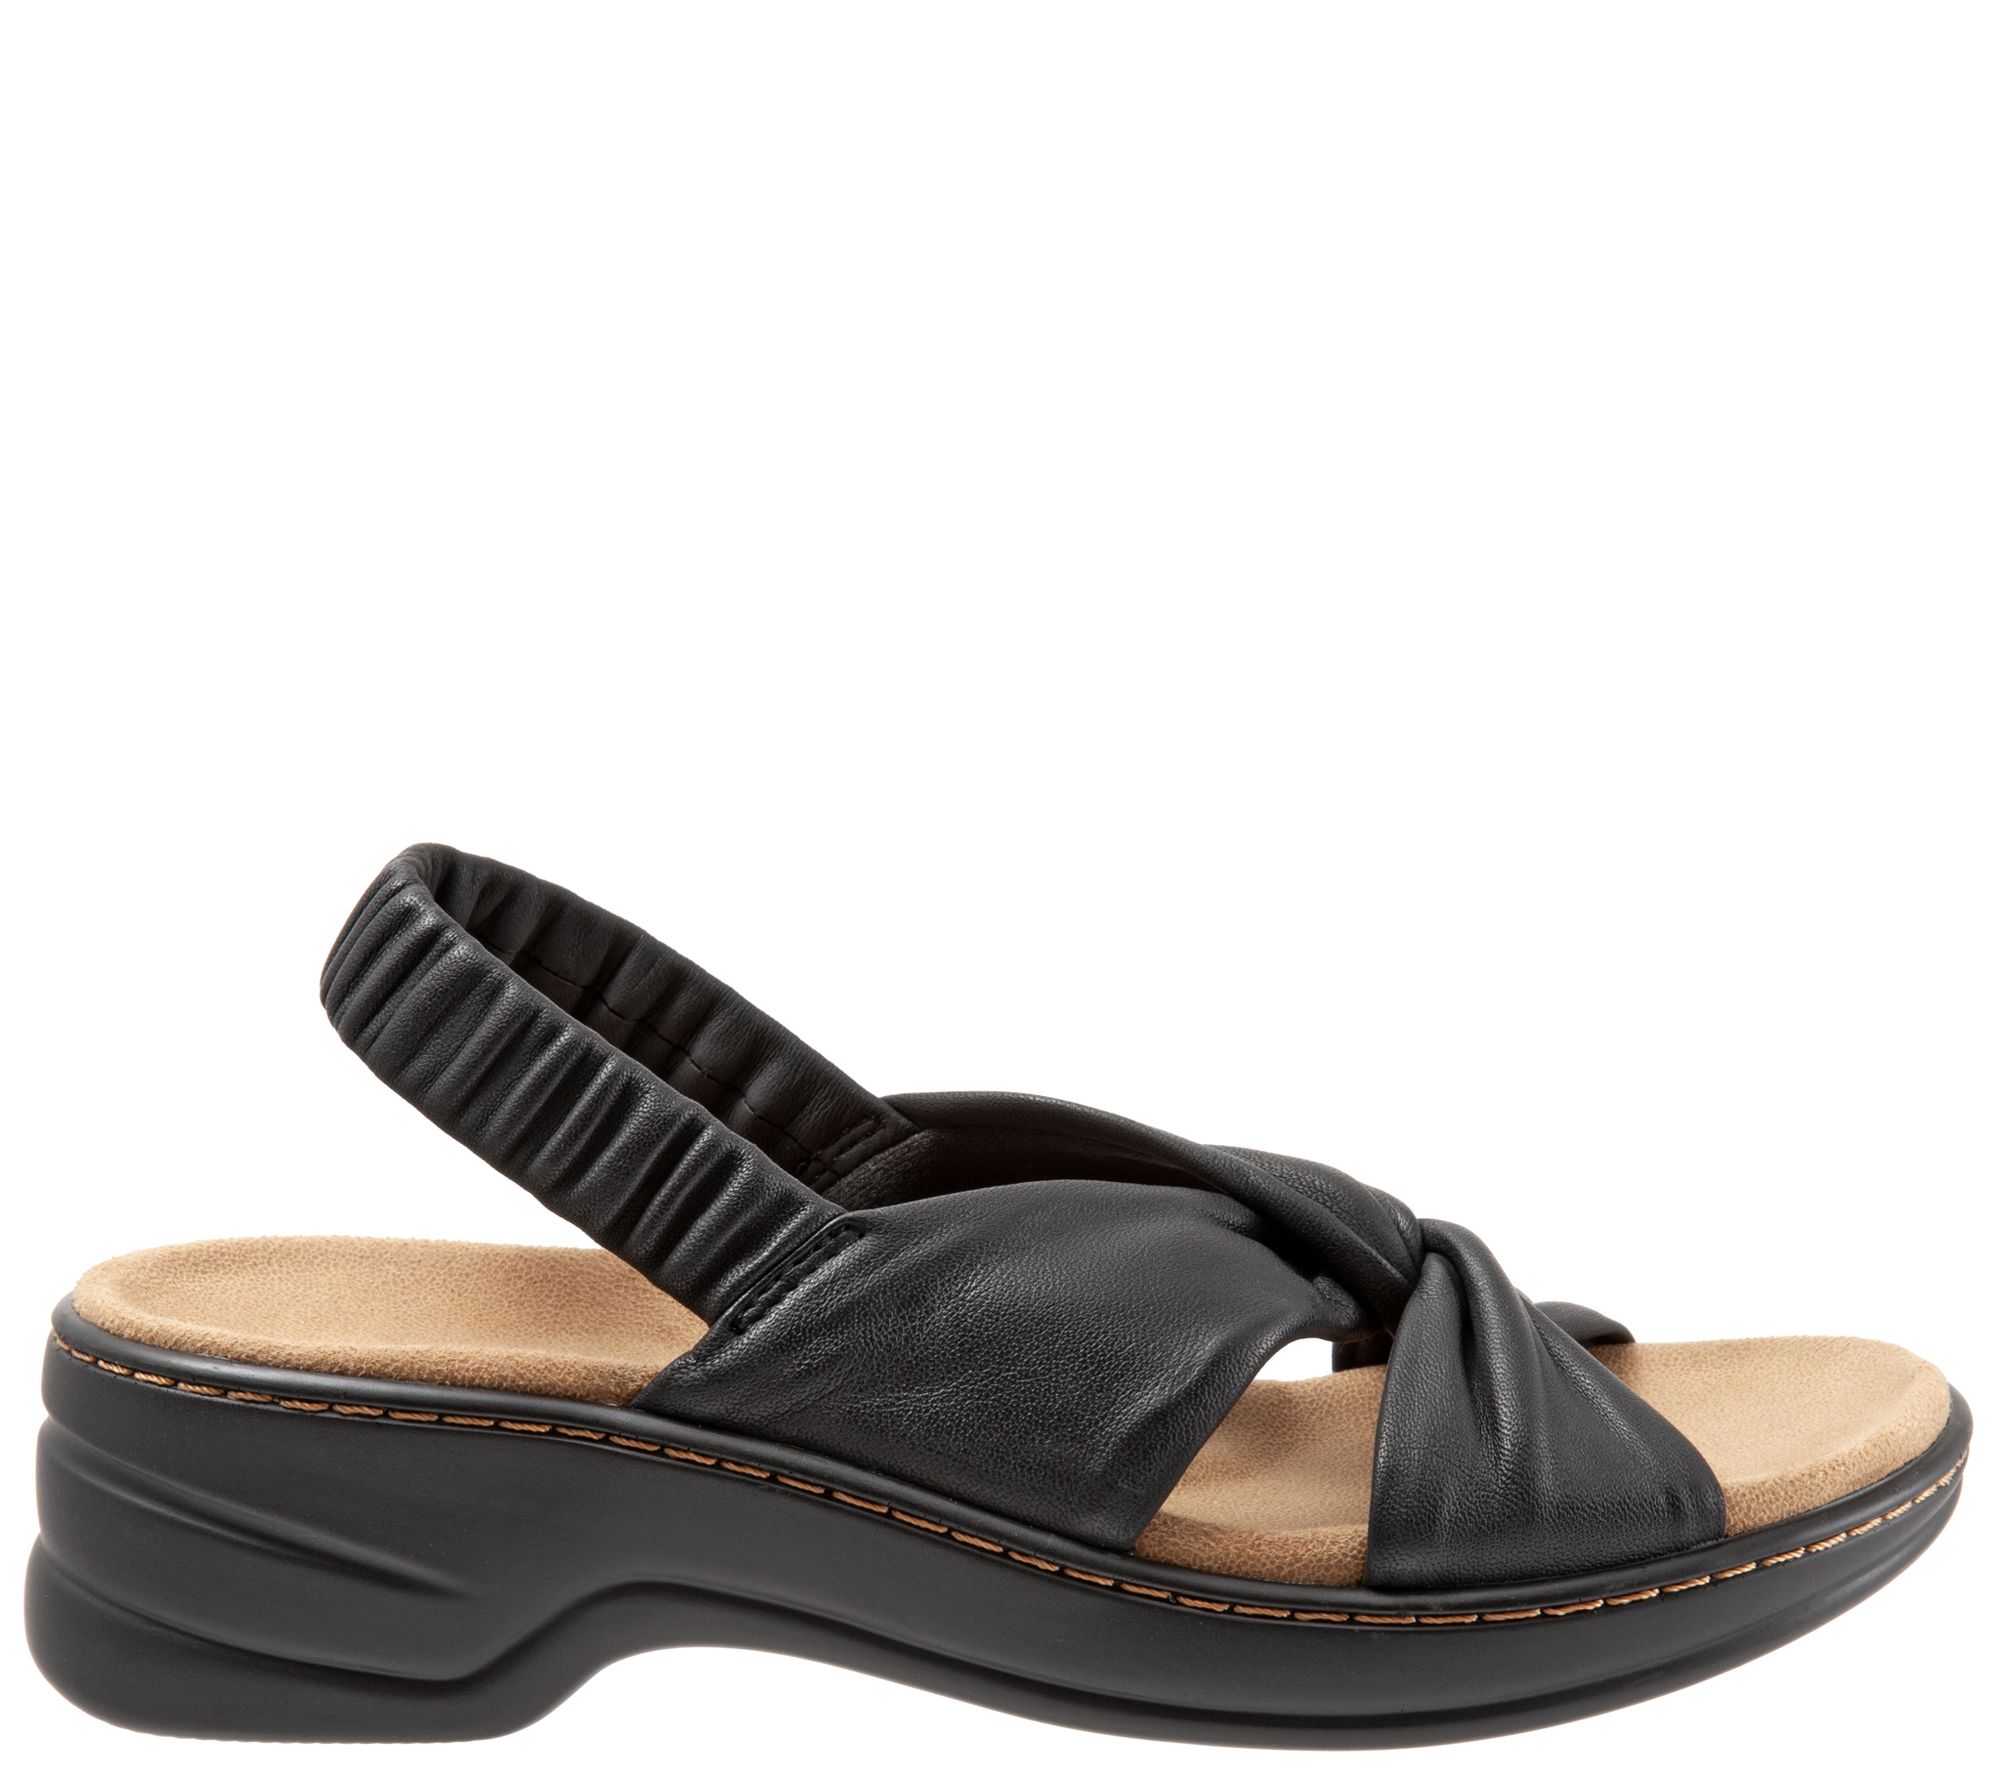 Trotters Soft Leather Sandals - Nella - QVC.com